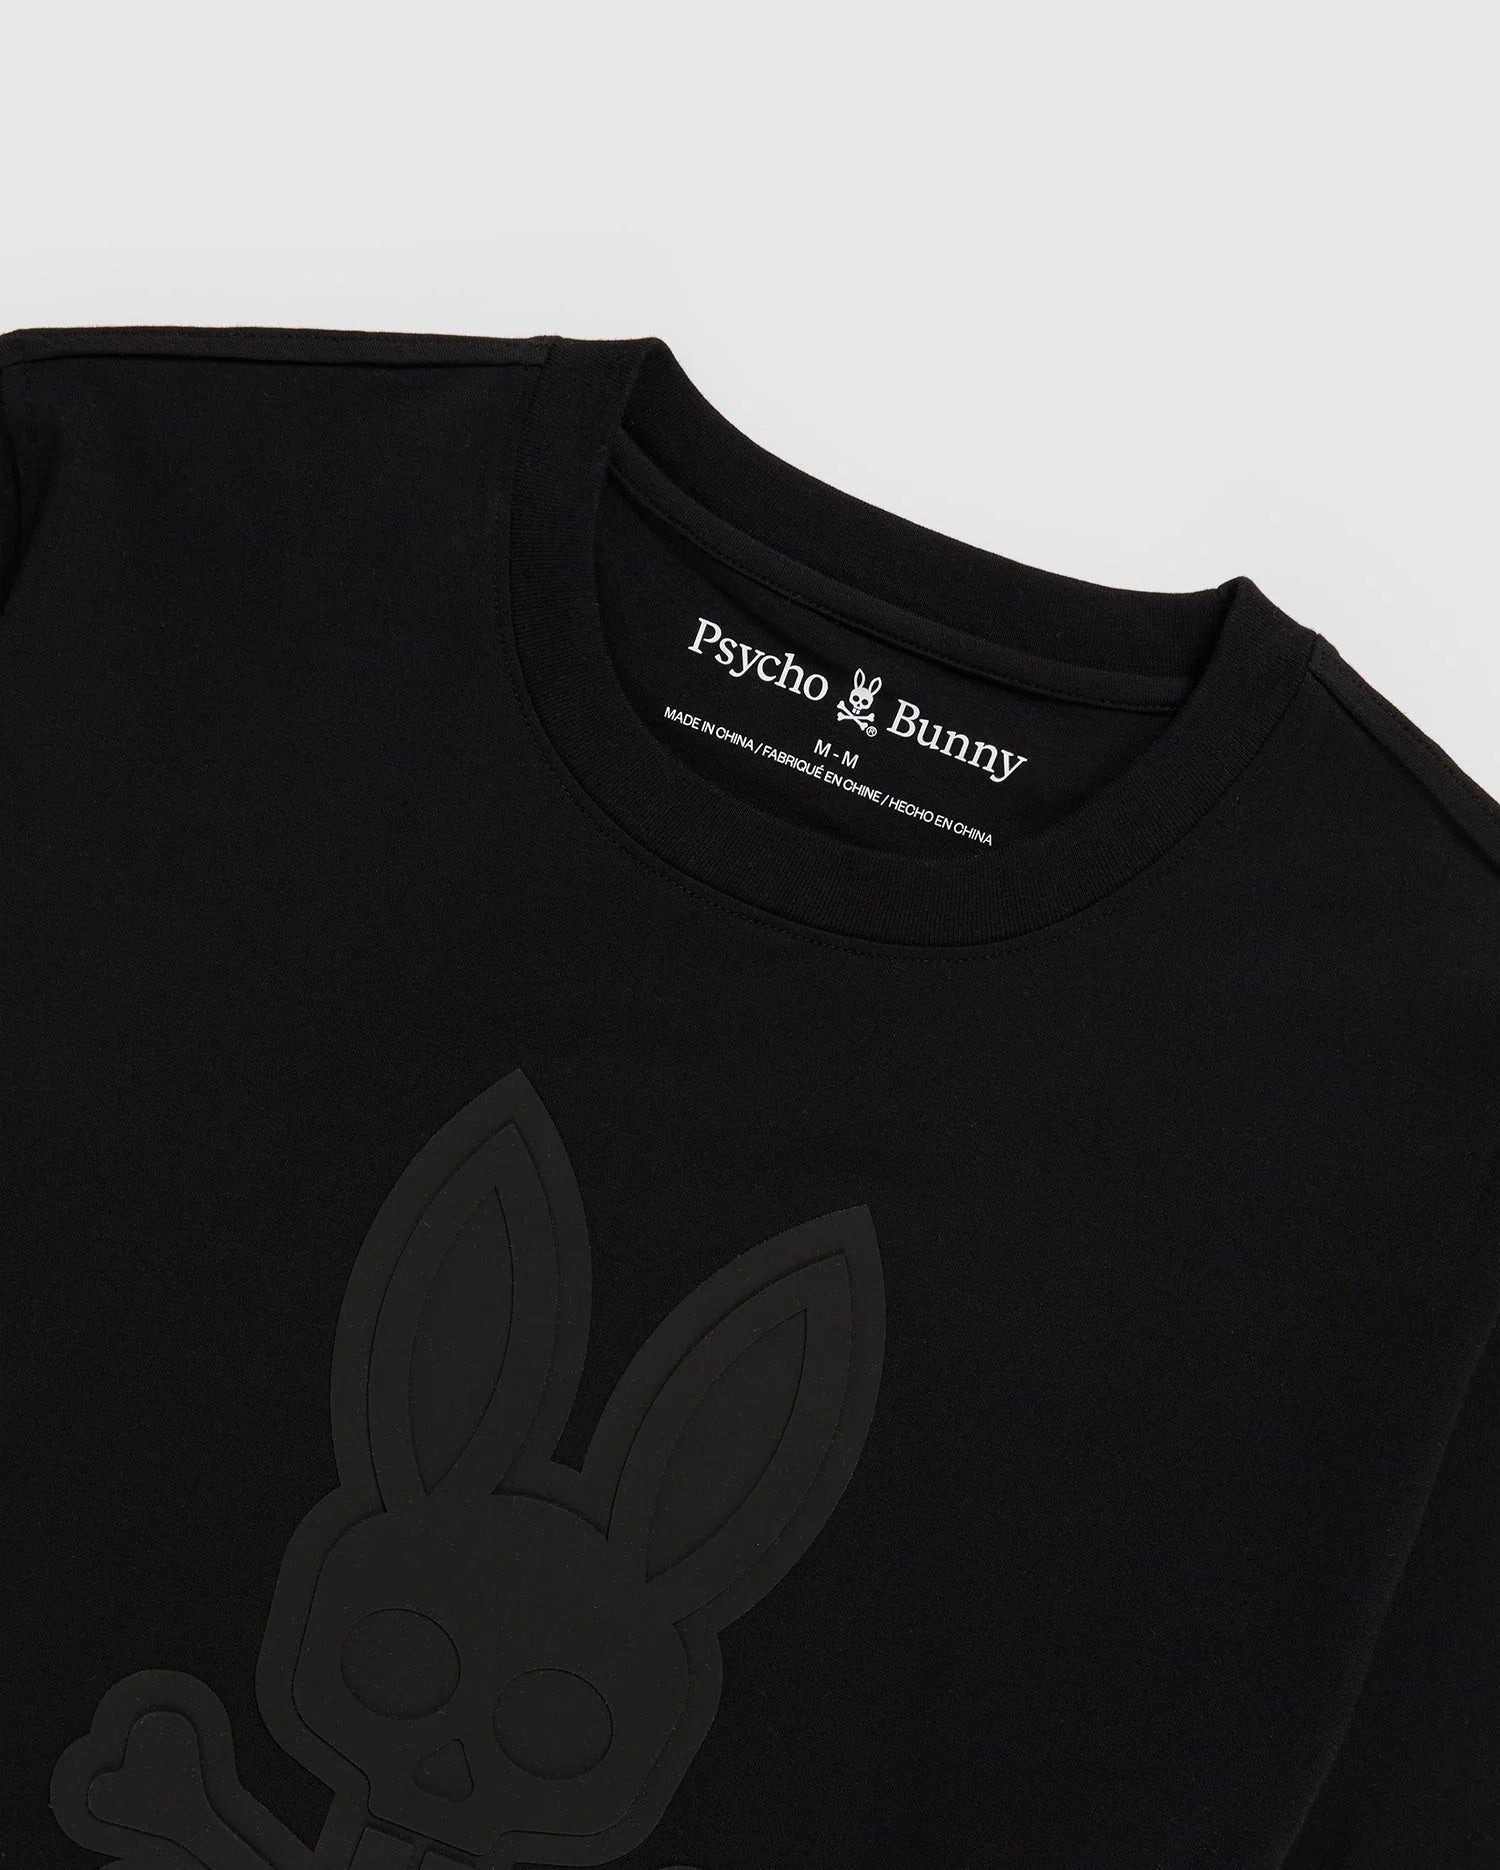 Damon Graphic T-Shirt Black